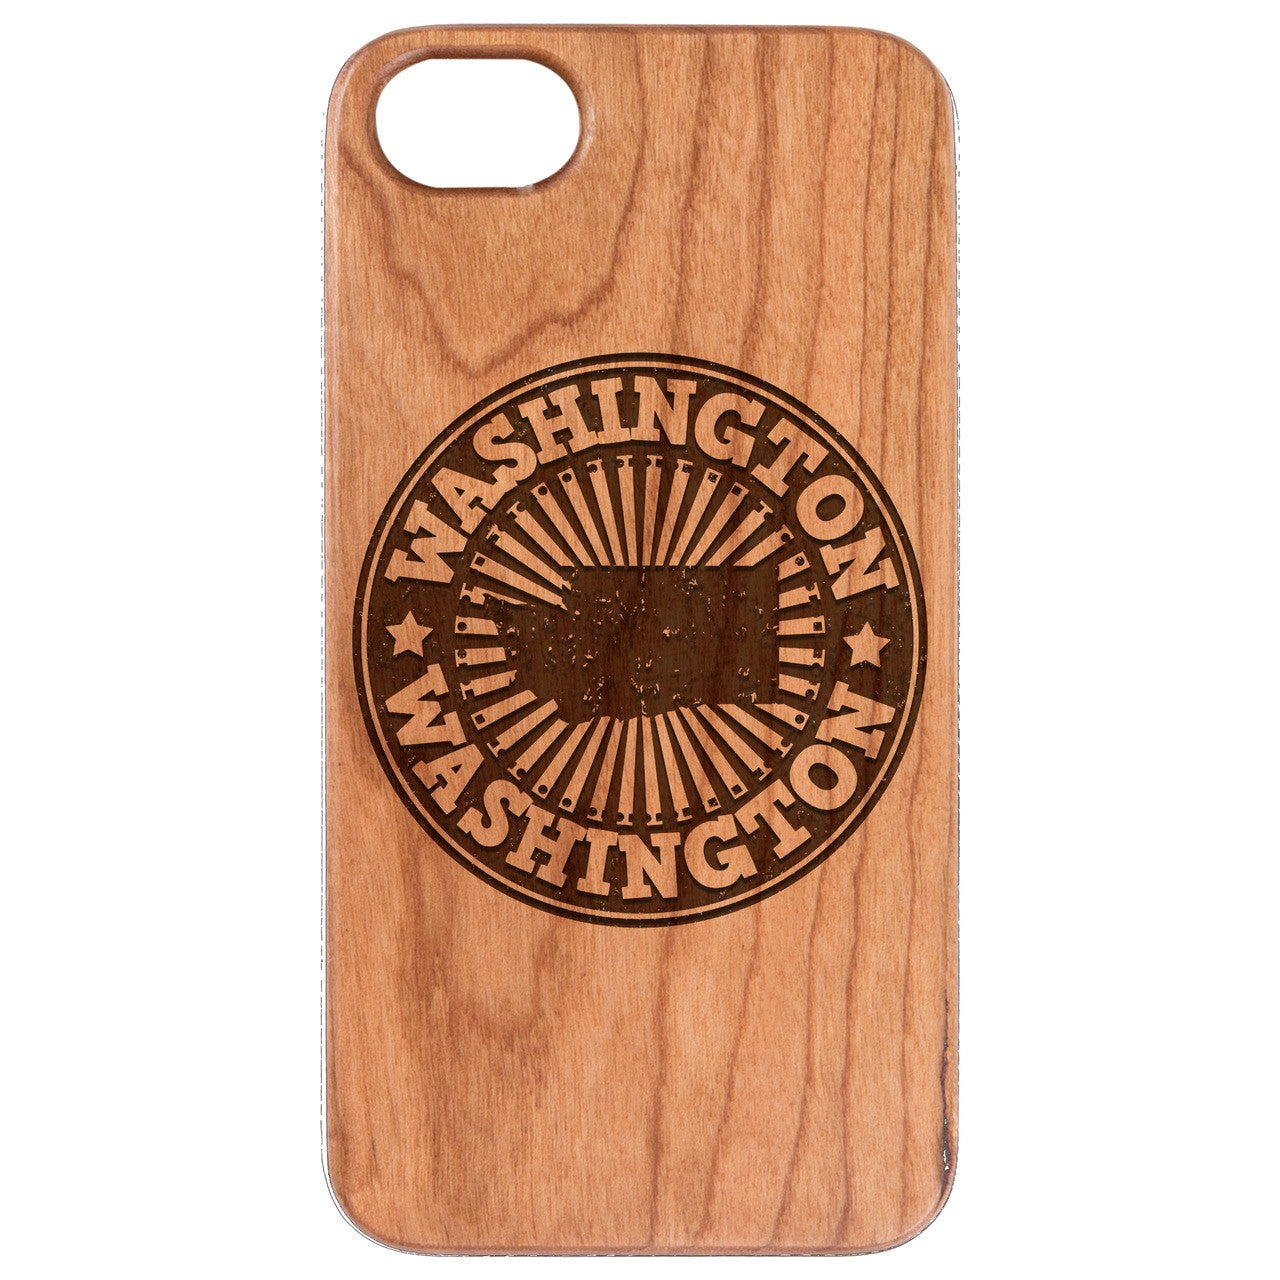  State Washington 2 - Engraved - Wooden Phone Case - IPhone 13 Models